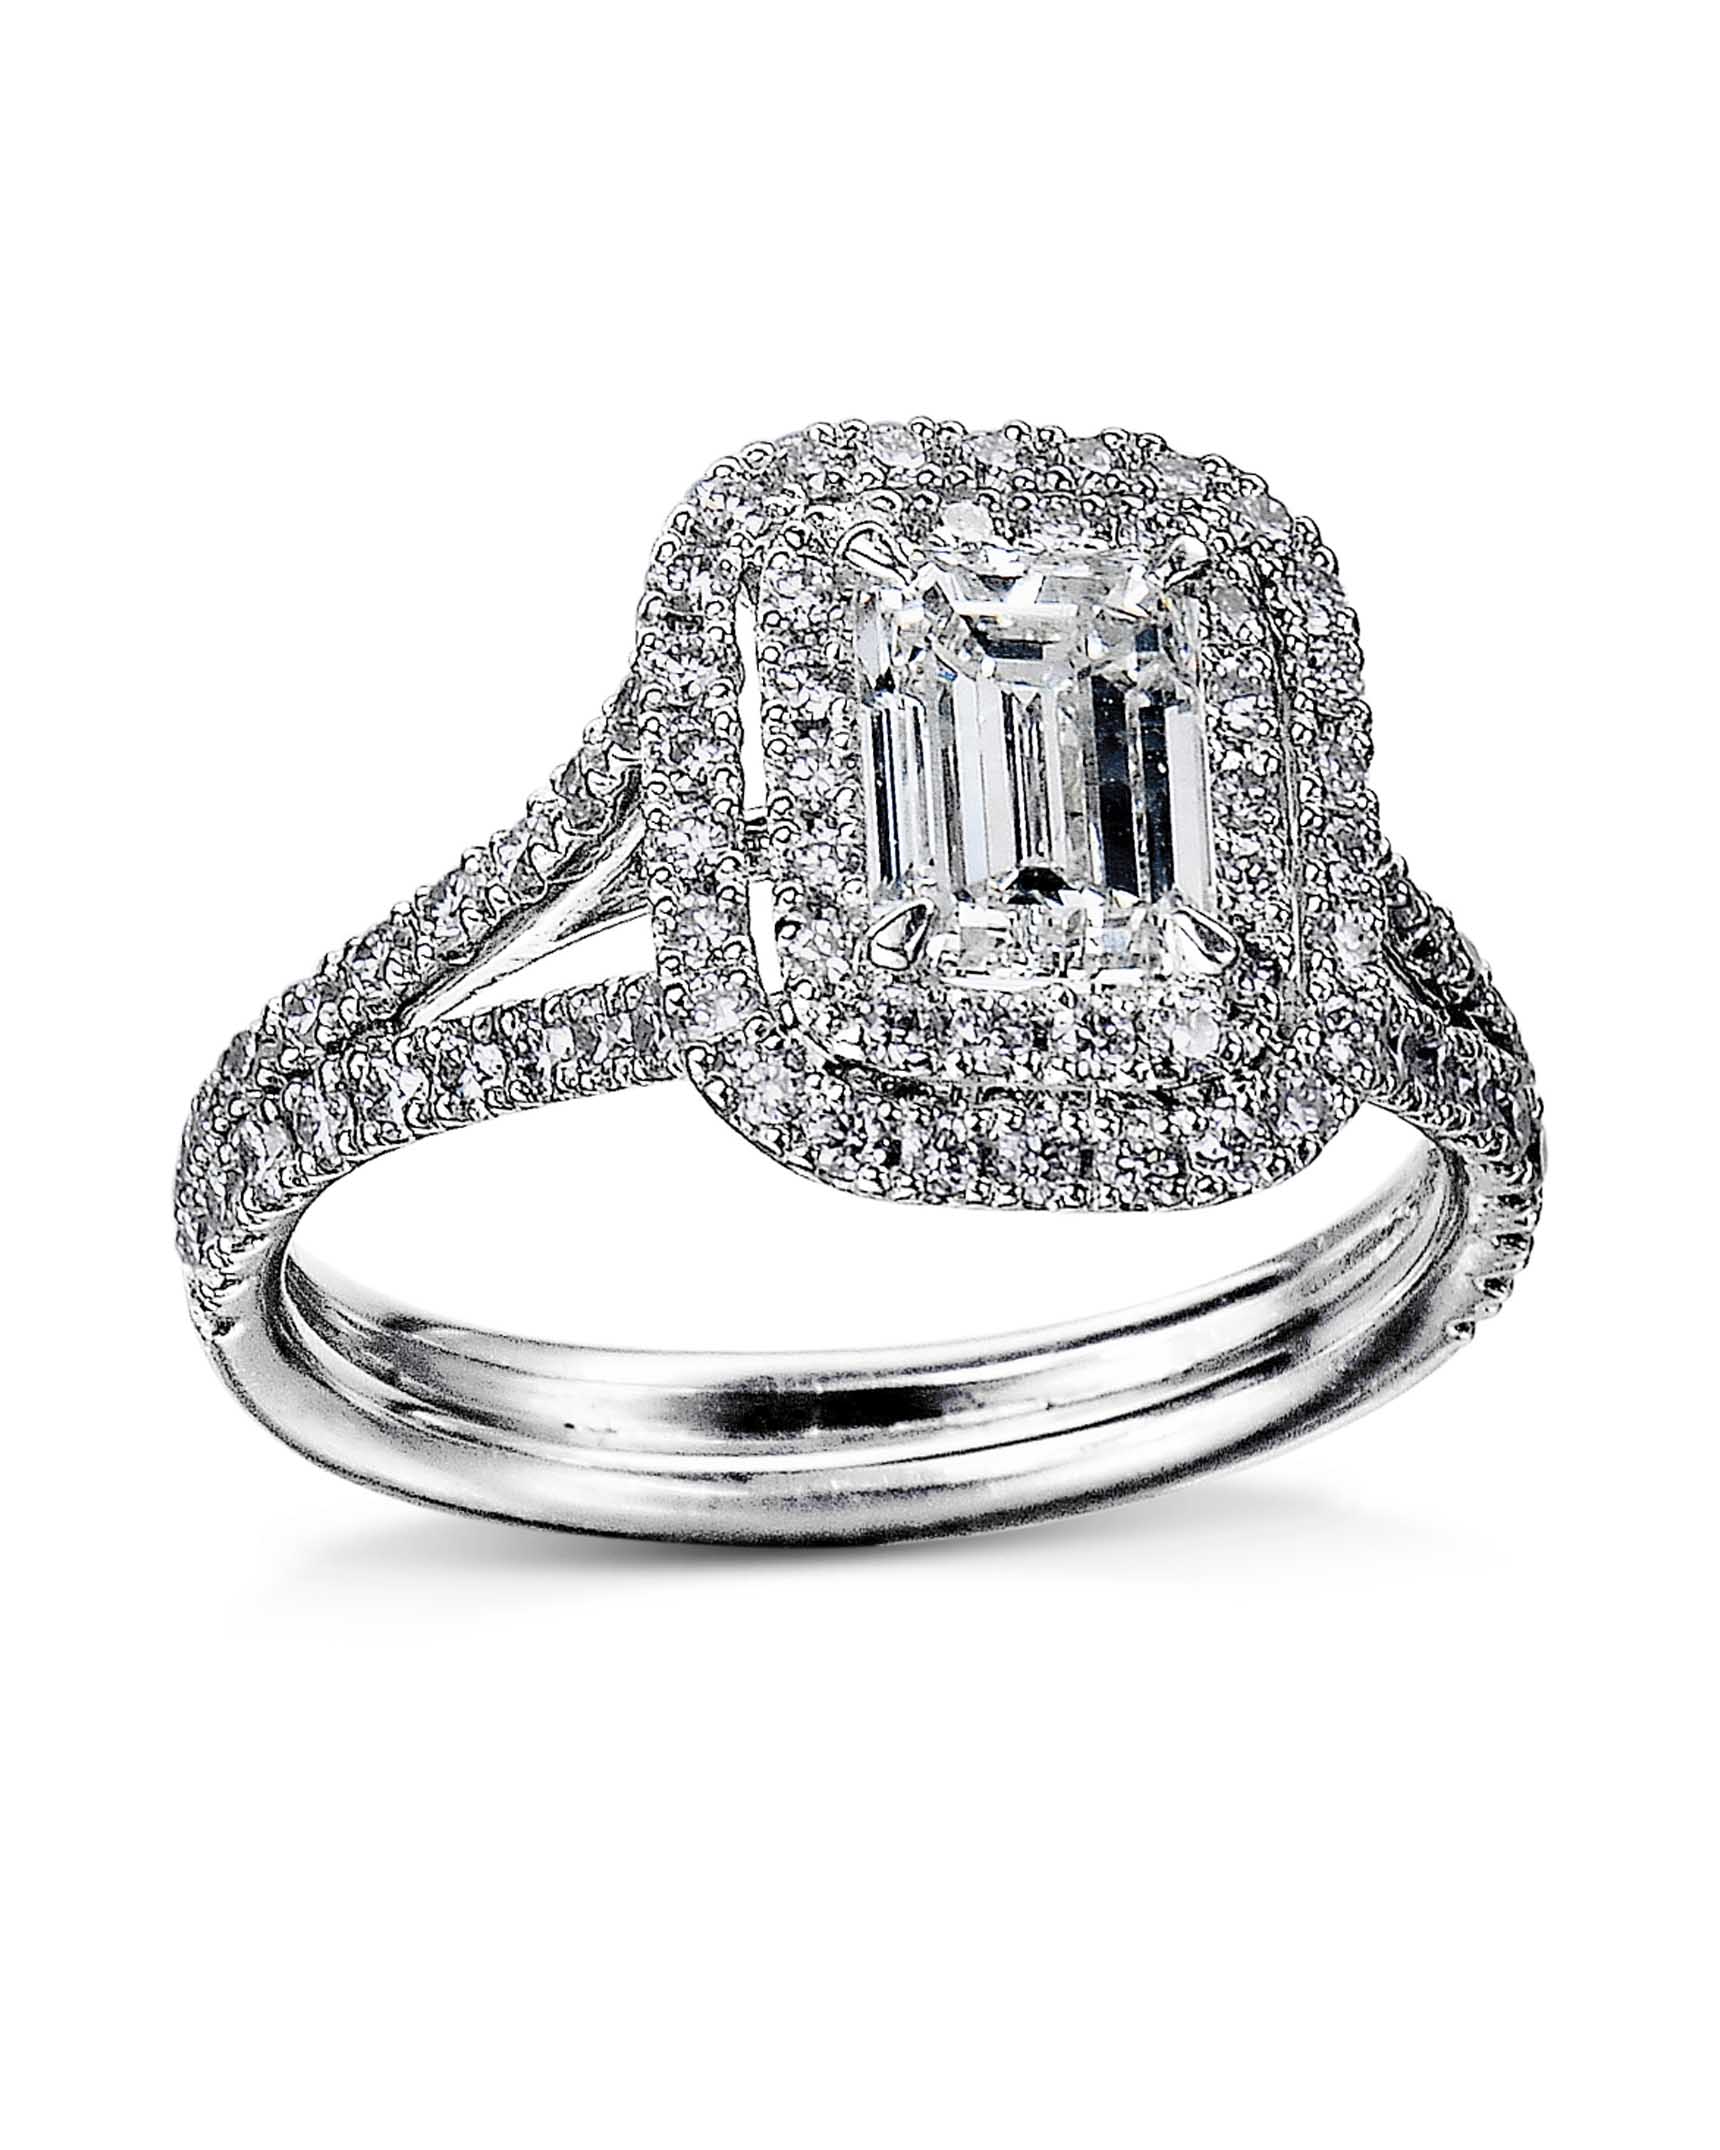 2 Carat Natural Emerald Cut Diamond Halo Engagement Ring in 14K White Gold  D/VS1 | eBay